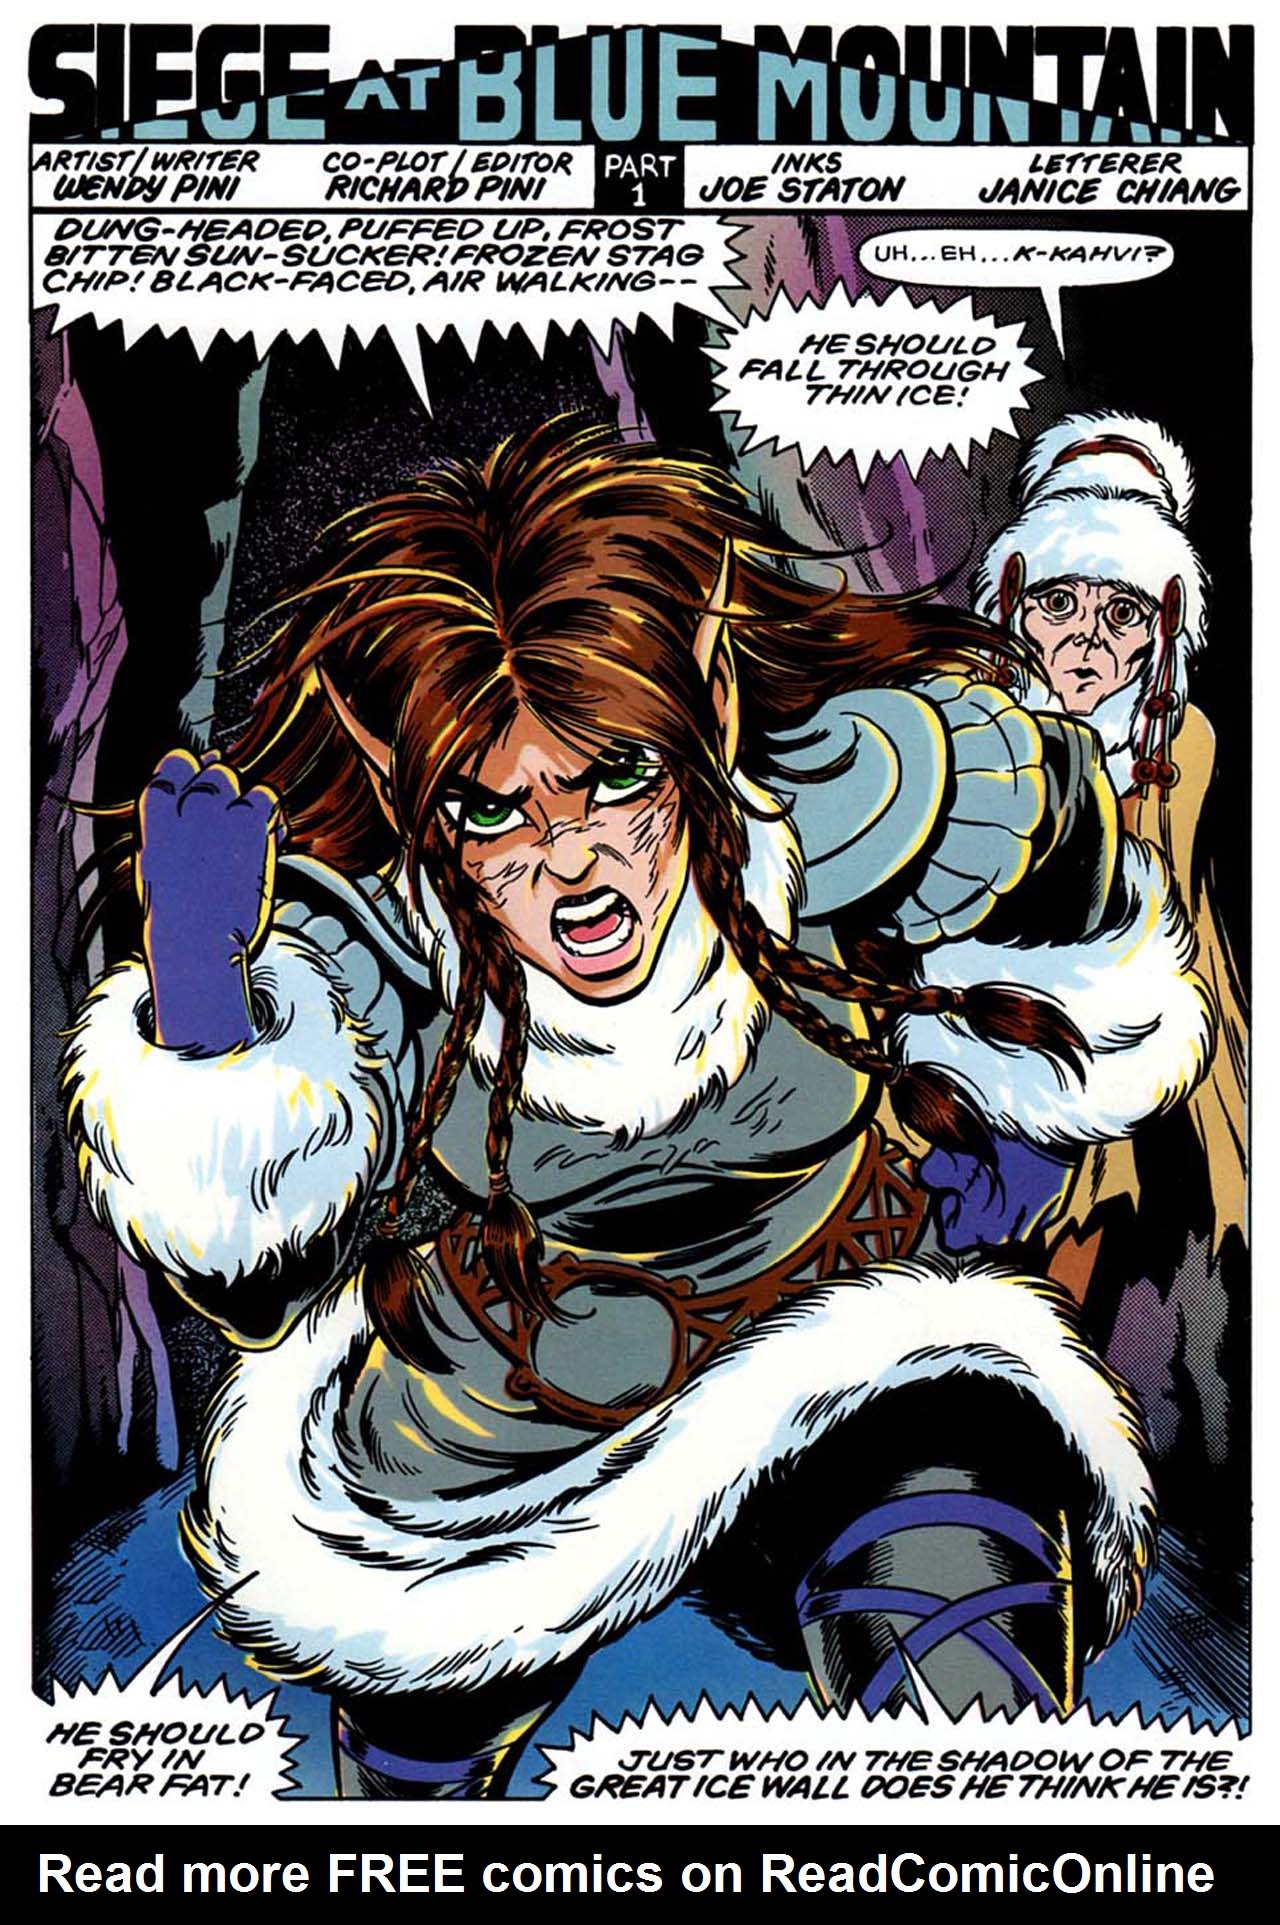 Read online ElfQuest: Siege at Blue Mountain comic -  Issue #1 - 4